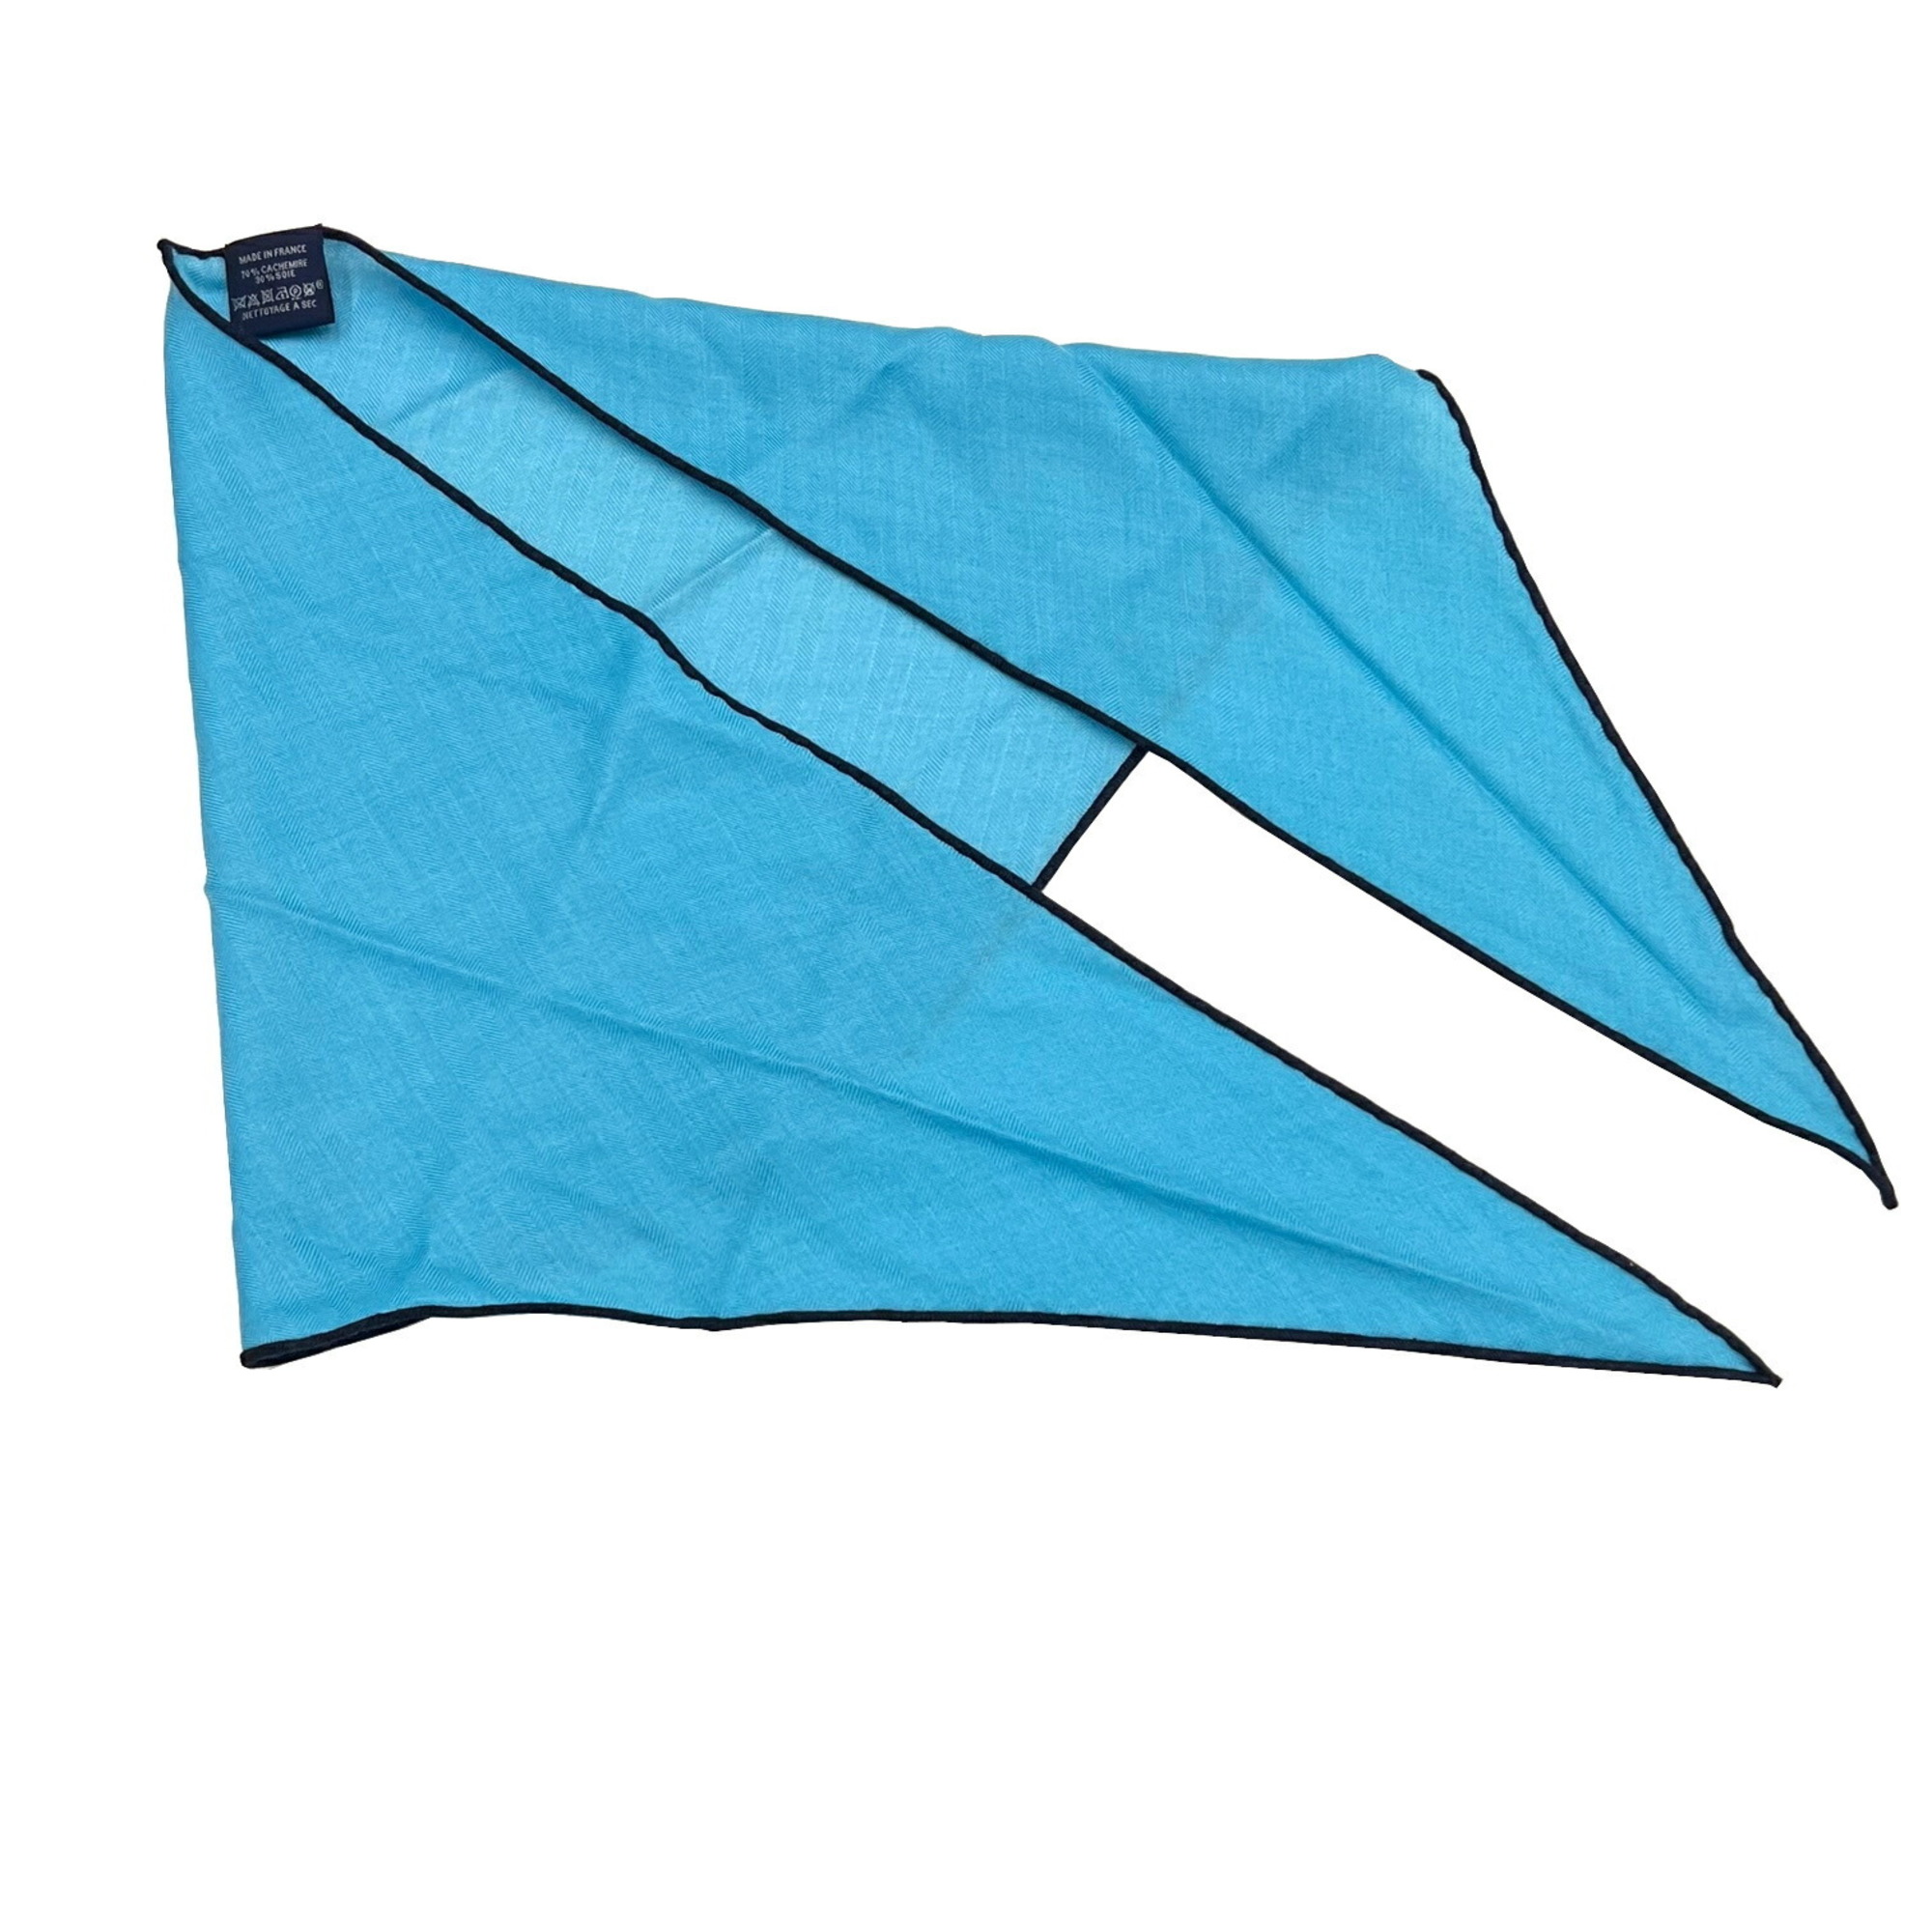 HERMES Hermes scarf triangle triangular cashmere silk blue ladies